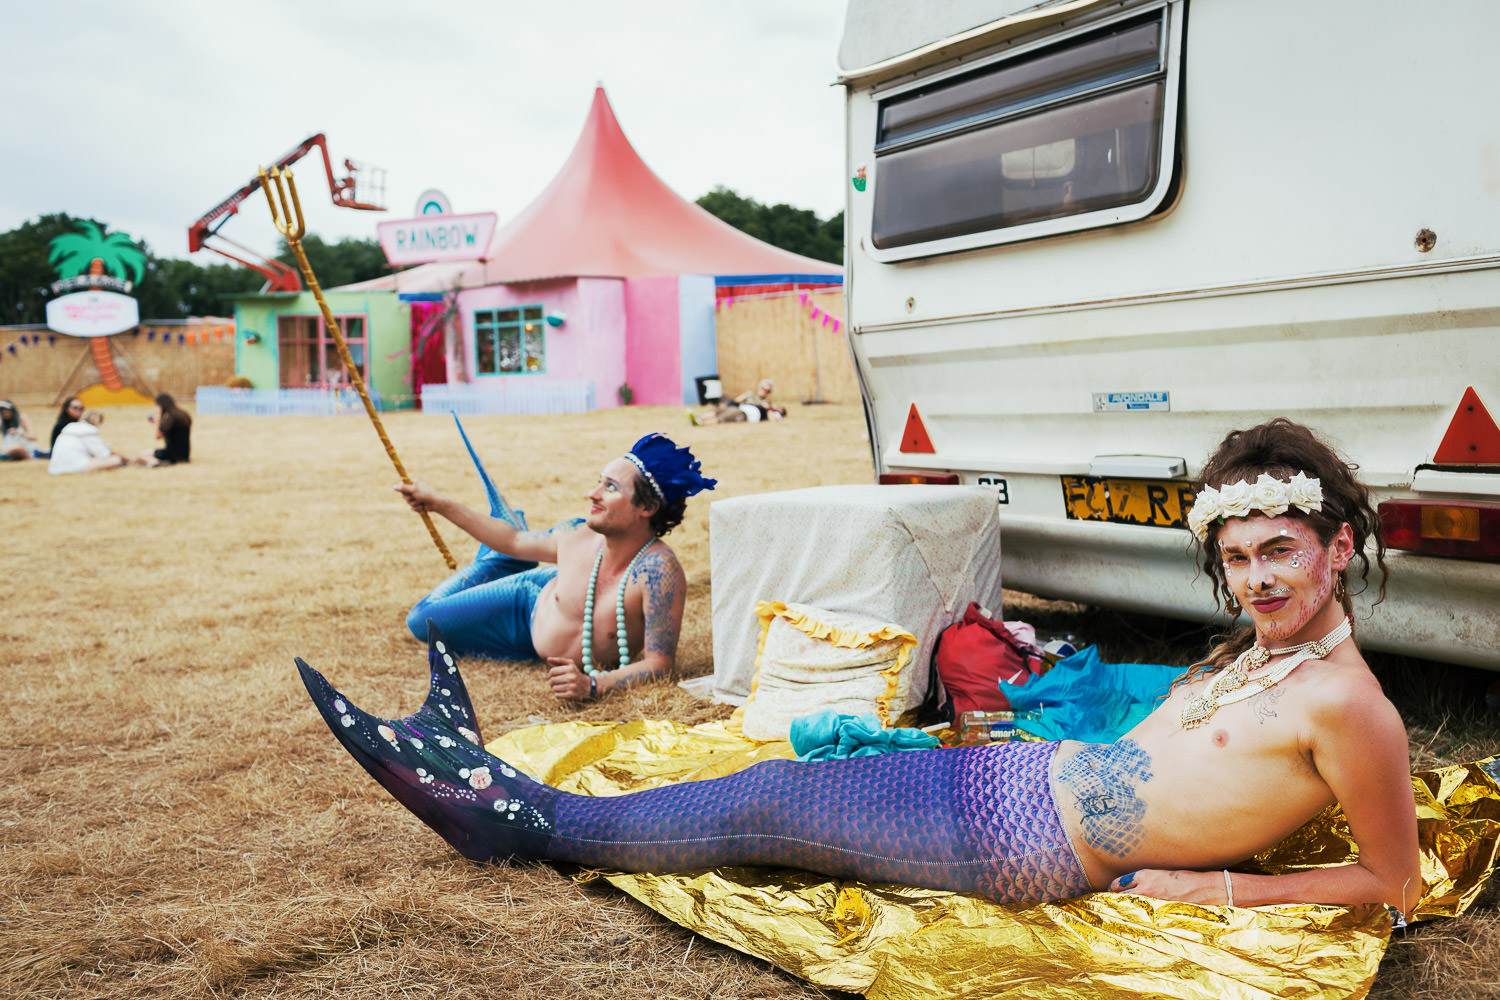 Charity Kase dressed as a mermaid lying by a caravan at Leefest Neverland.